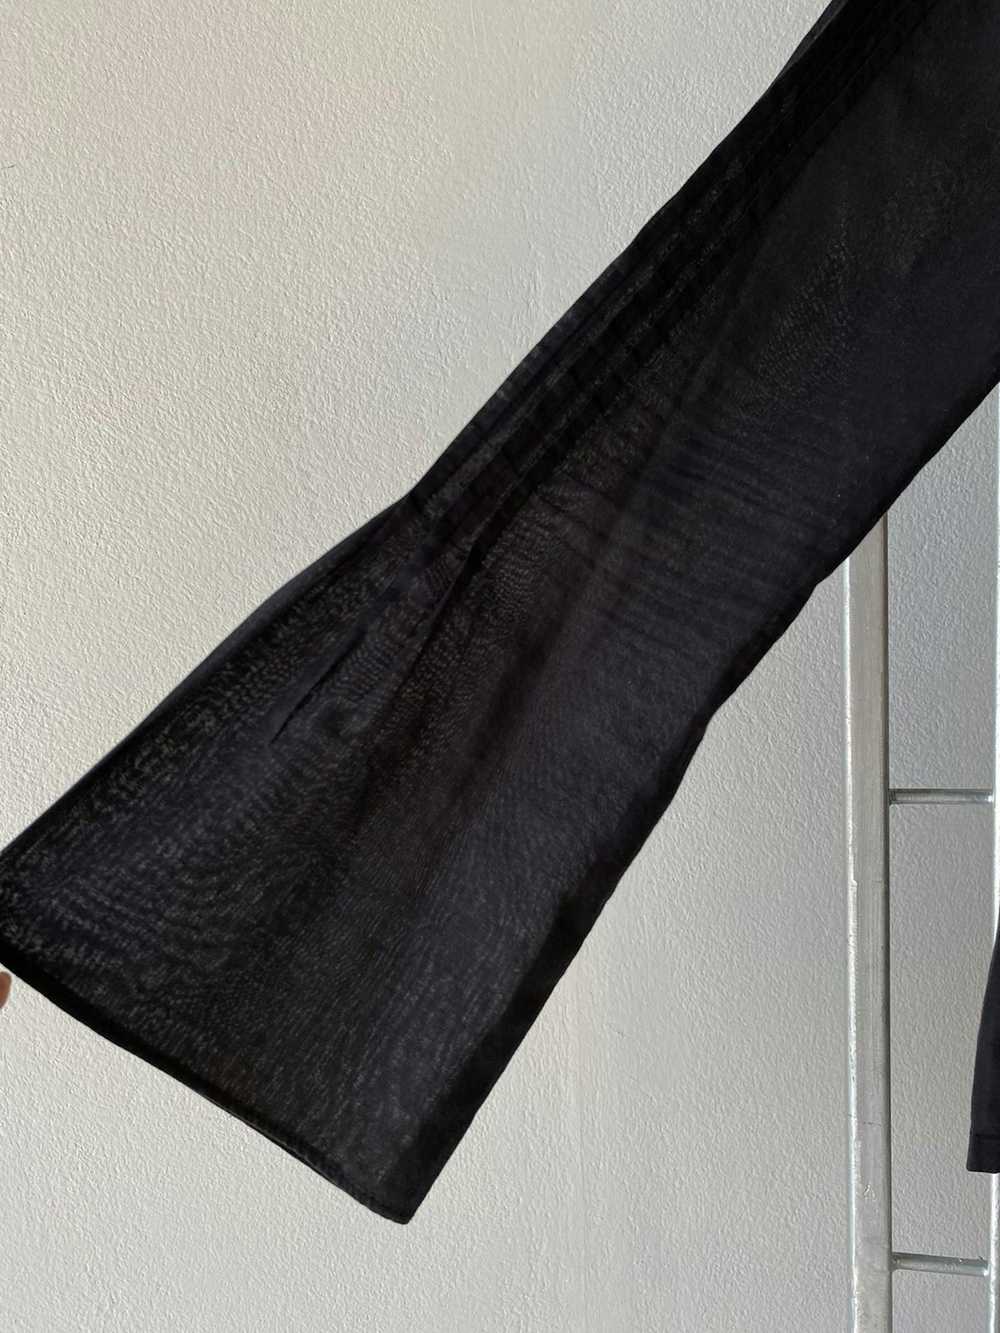 Kansai Yamamoto Kansai Yamamoto Bis black blouse - image 4